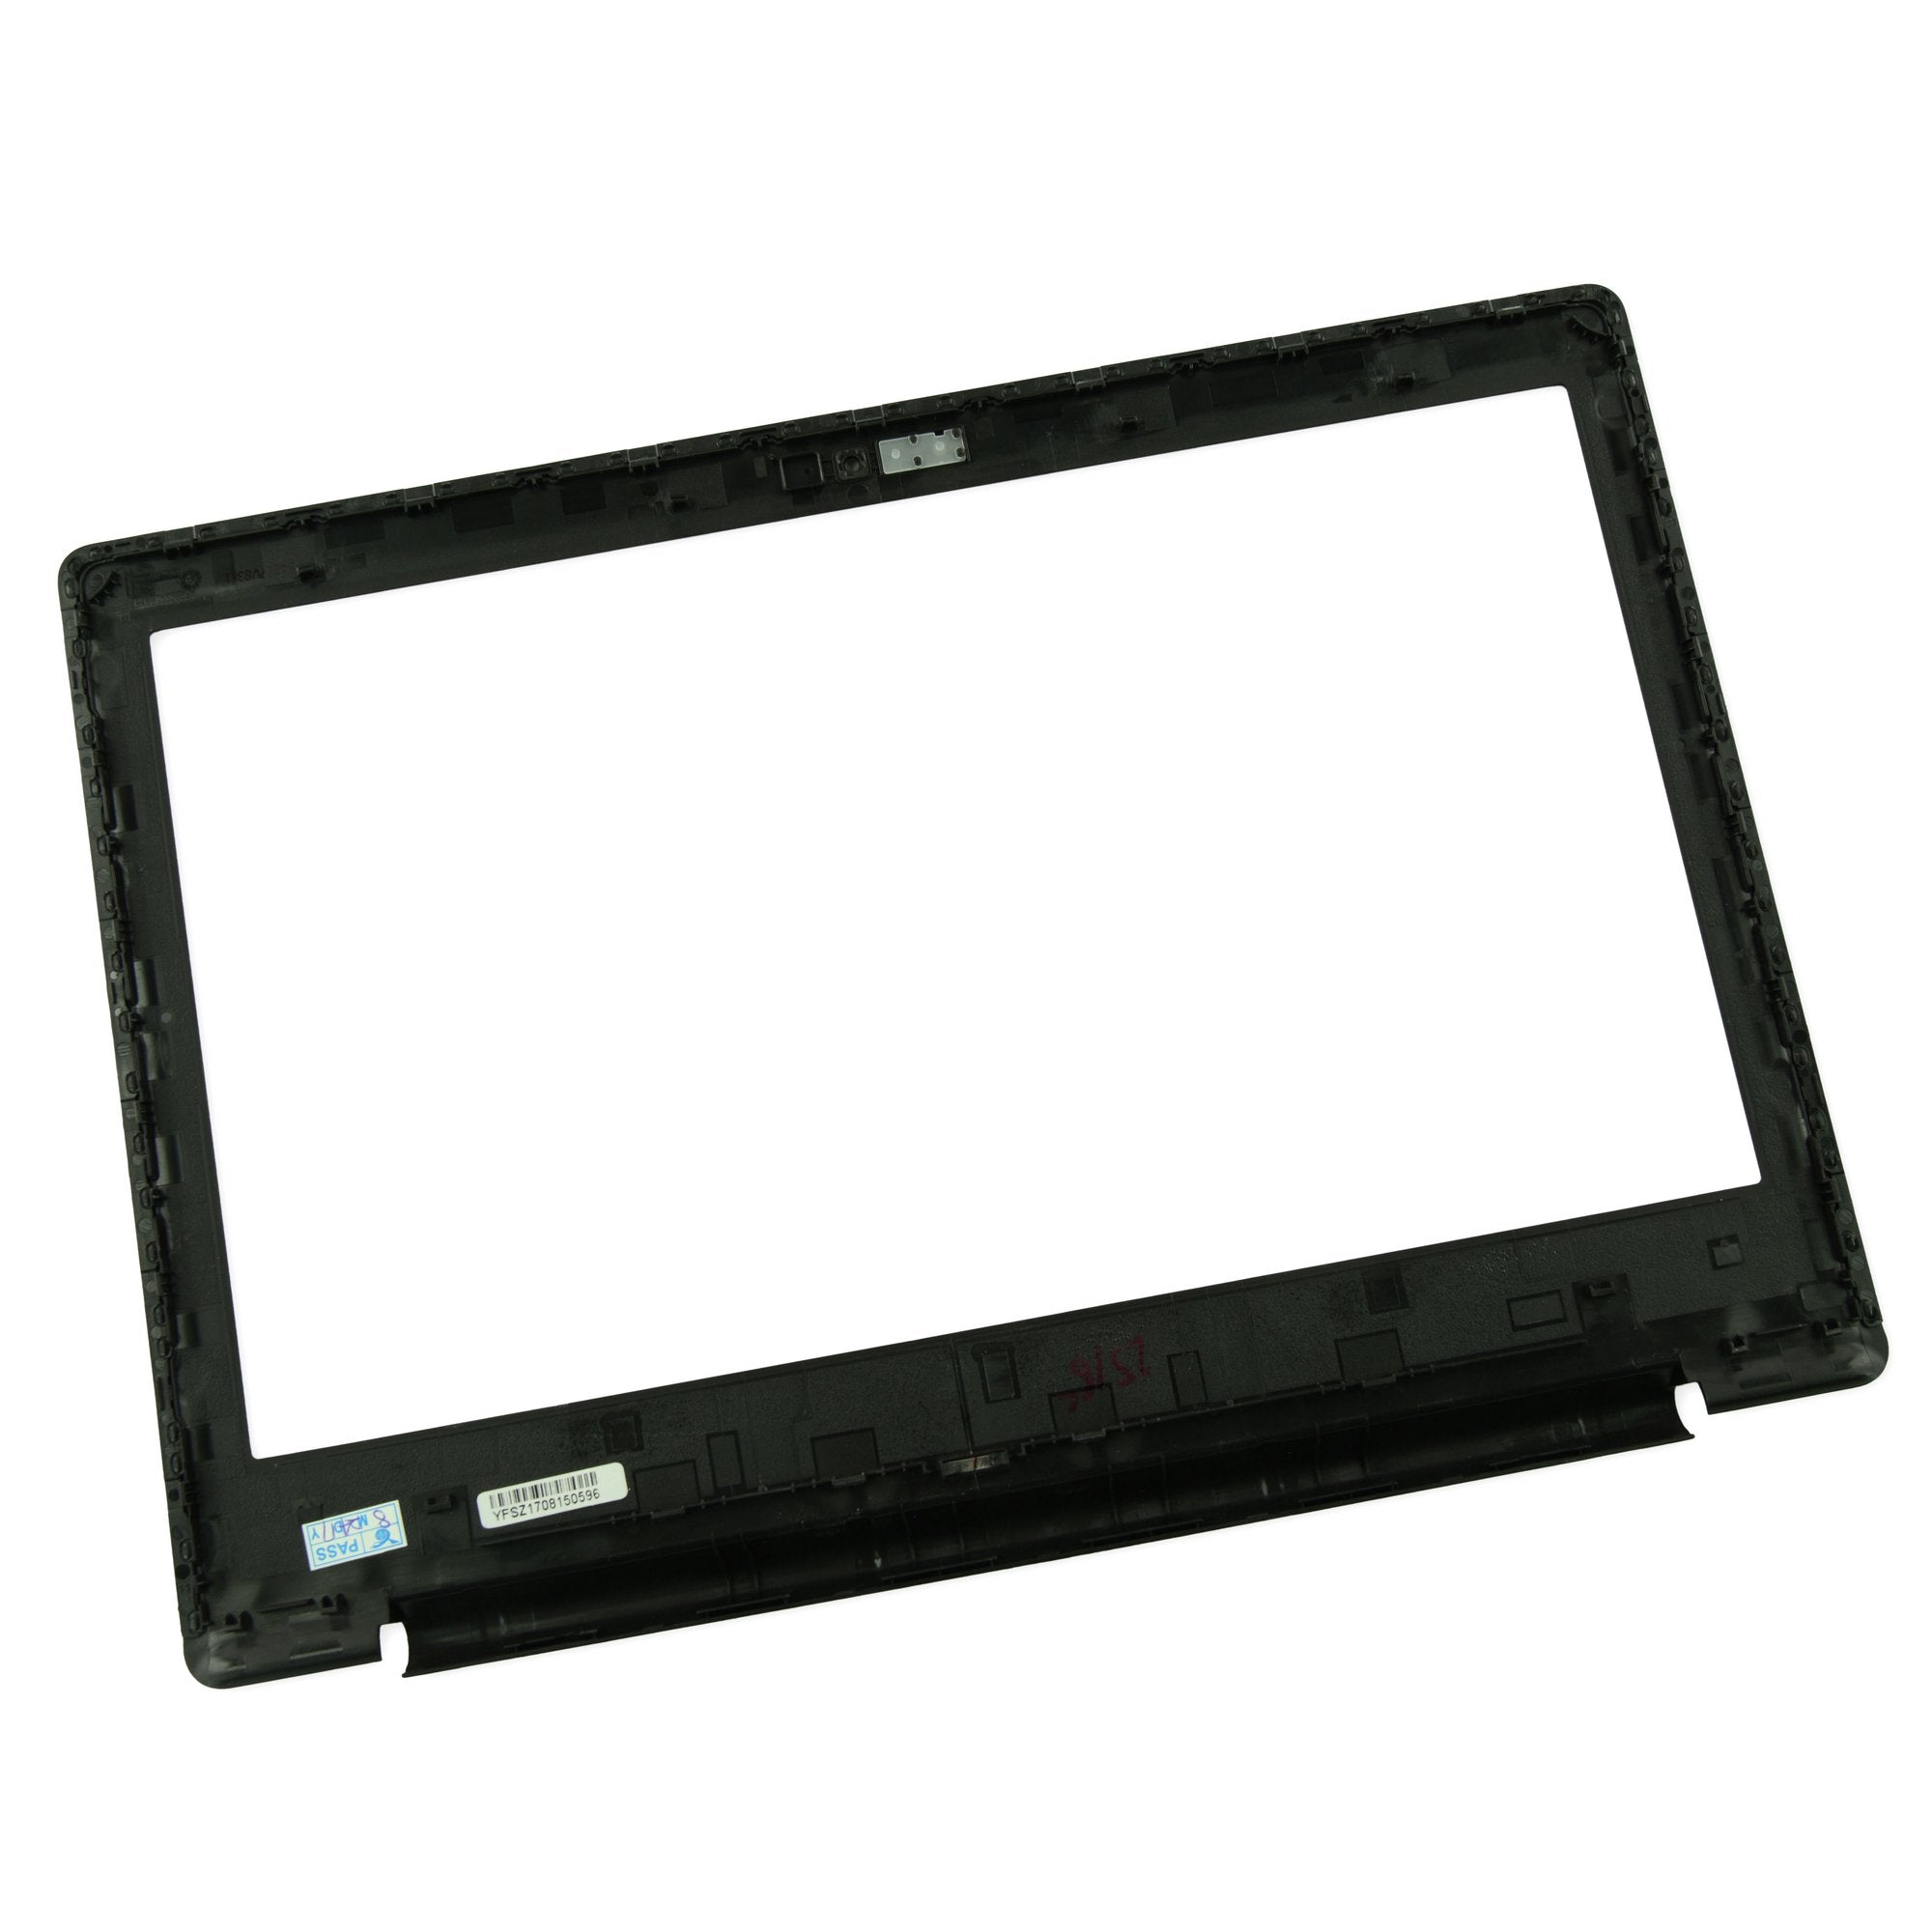 Samsung Chromebook XE503C12 LCD Bezel Black Used, A-Stock